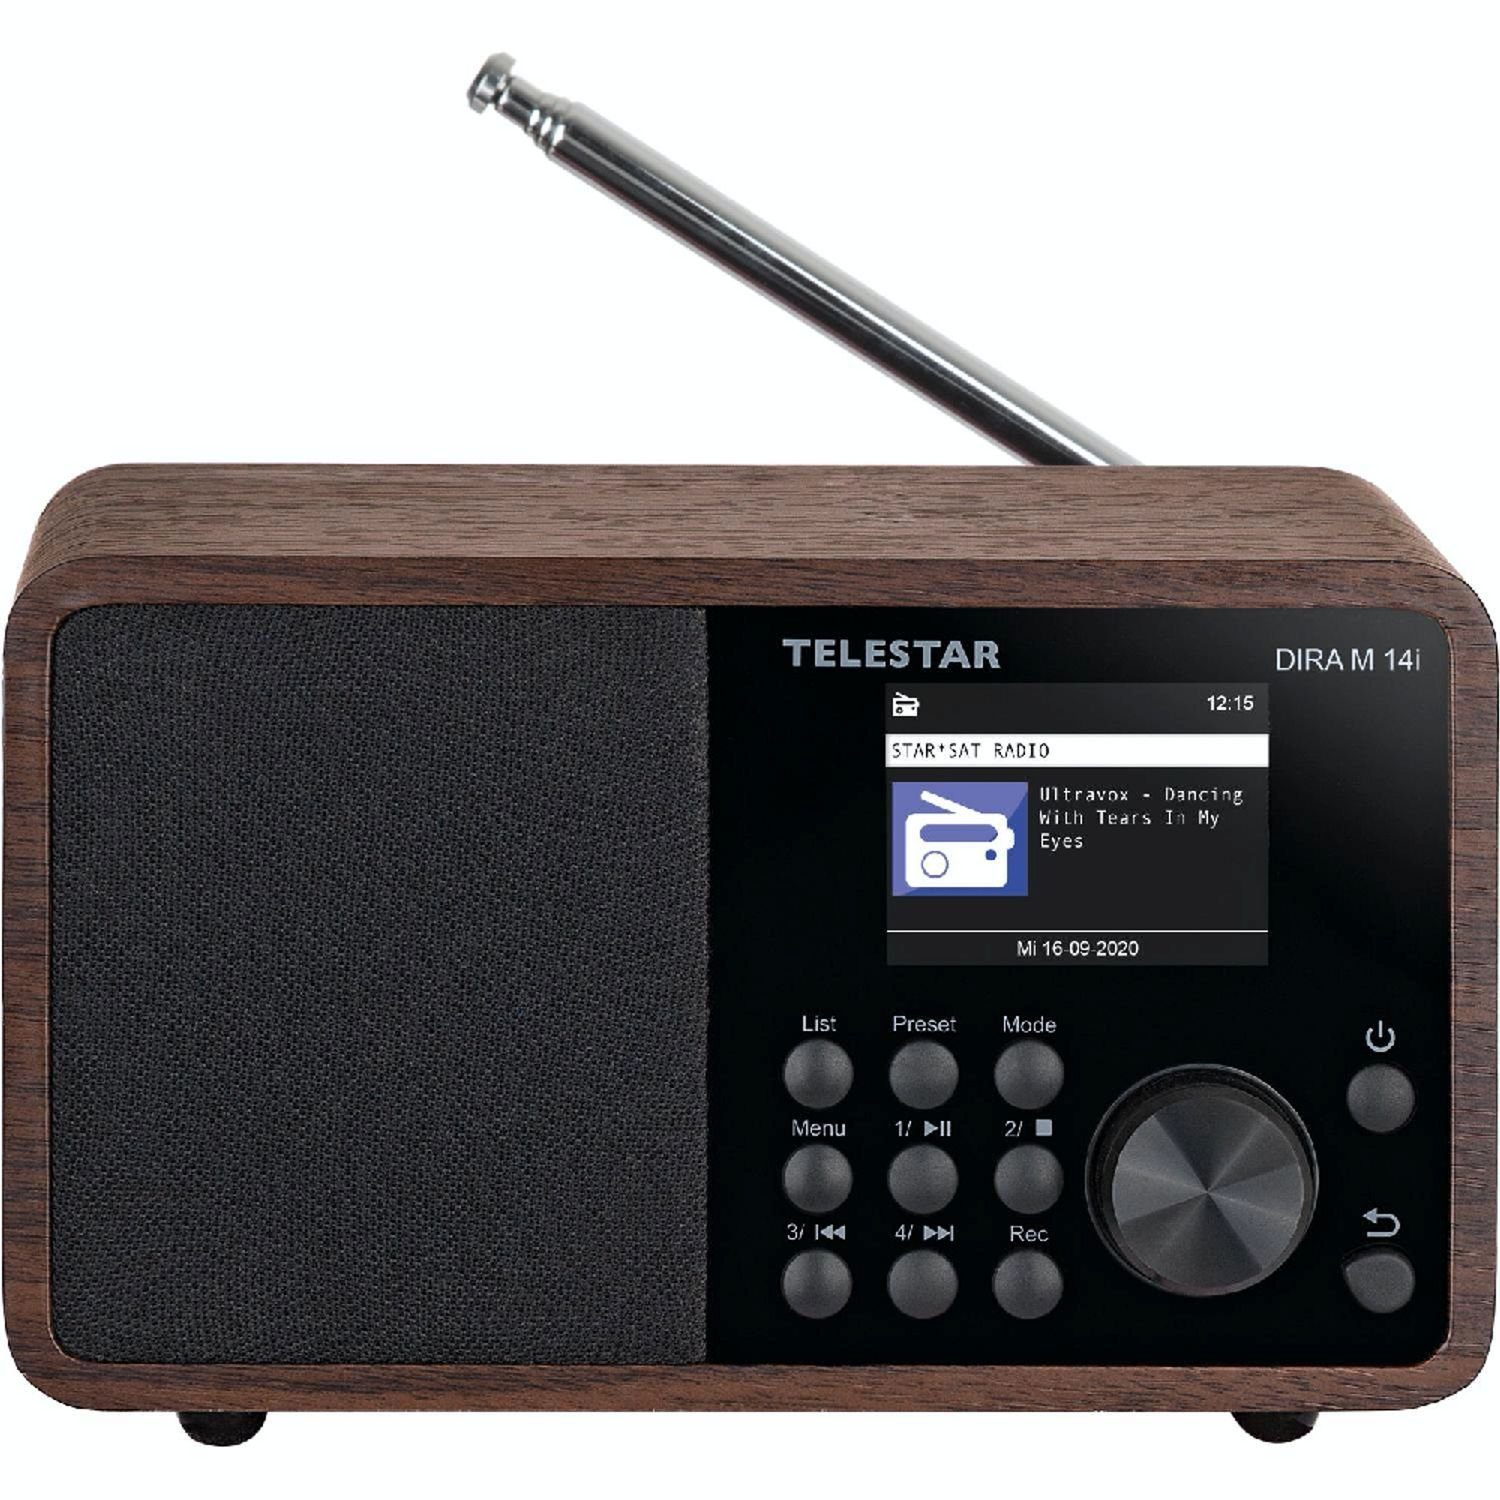 TELESTAR DIRA M 10 WMA, USB 15 (DAB) AAC) Multifunktionsradio (DAB+, DAB+/UKW DAB+/FM/Web & 14i Mediafunktion MP3, Internetradiosender, UKW, Speicherplatz Digitalradio für W, je Internetradio, Display